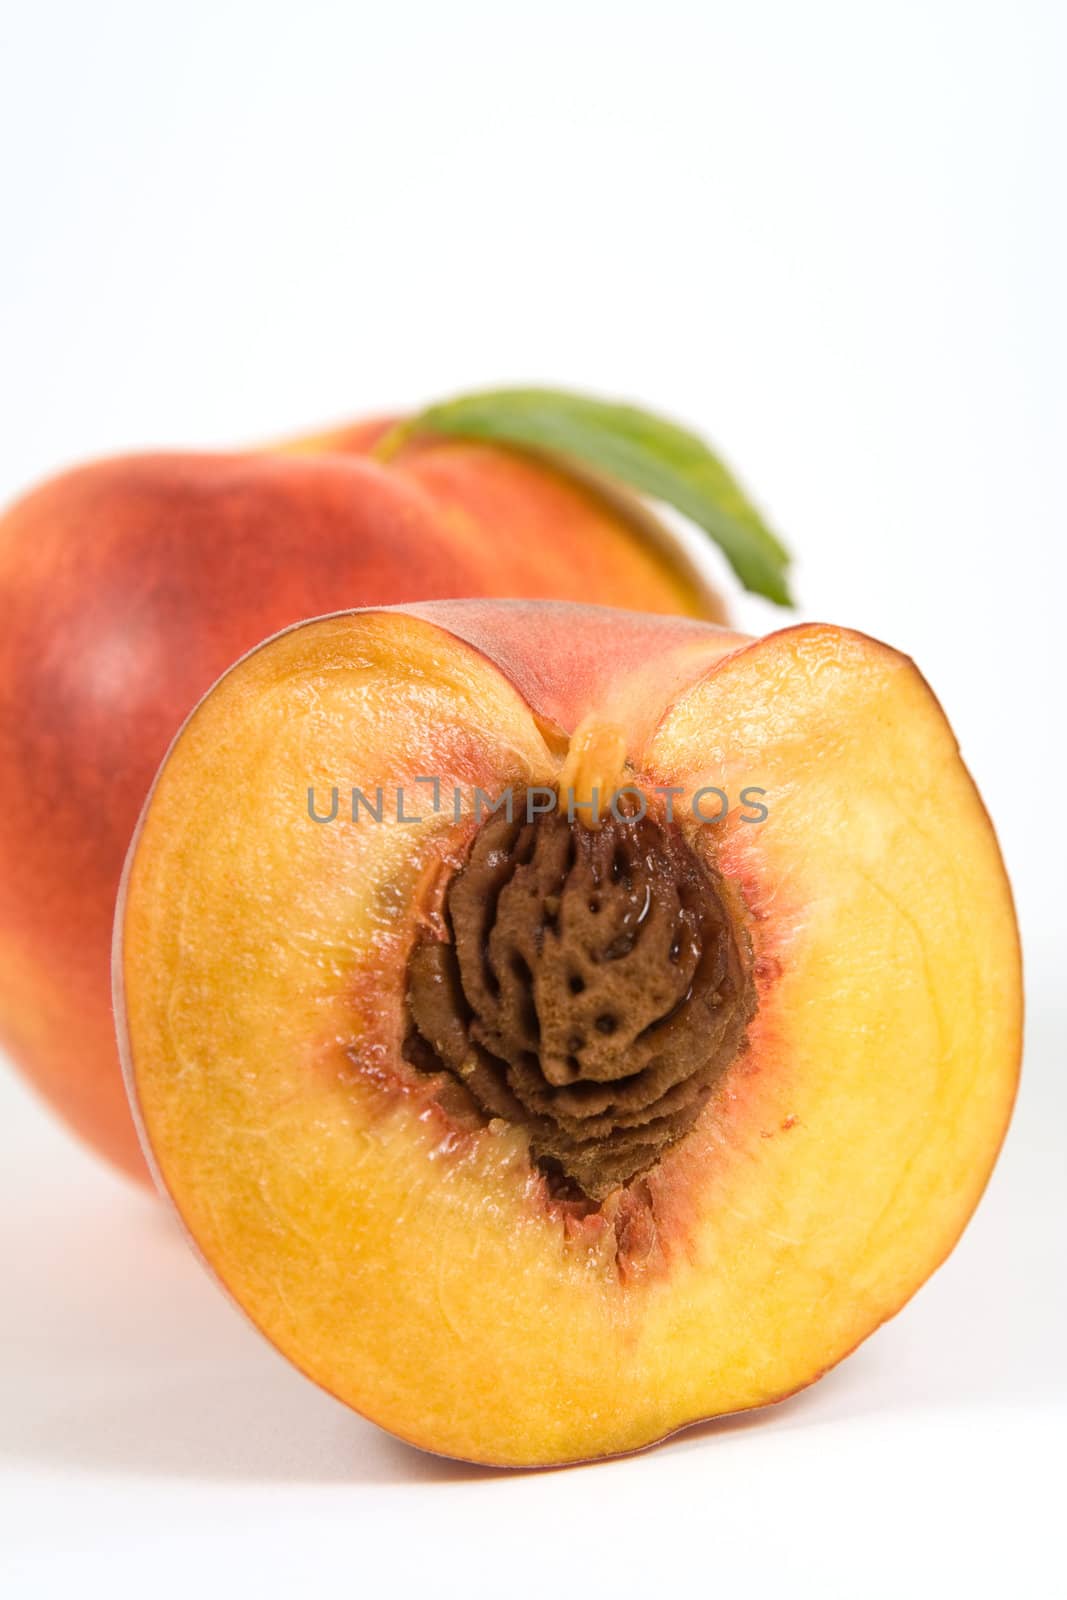 Closeup image devided in half juicy peach